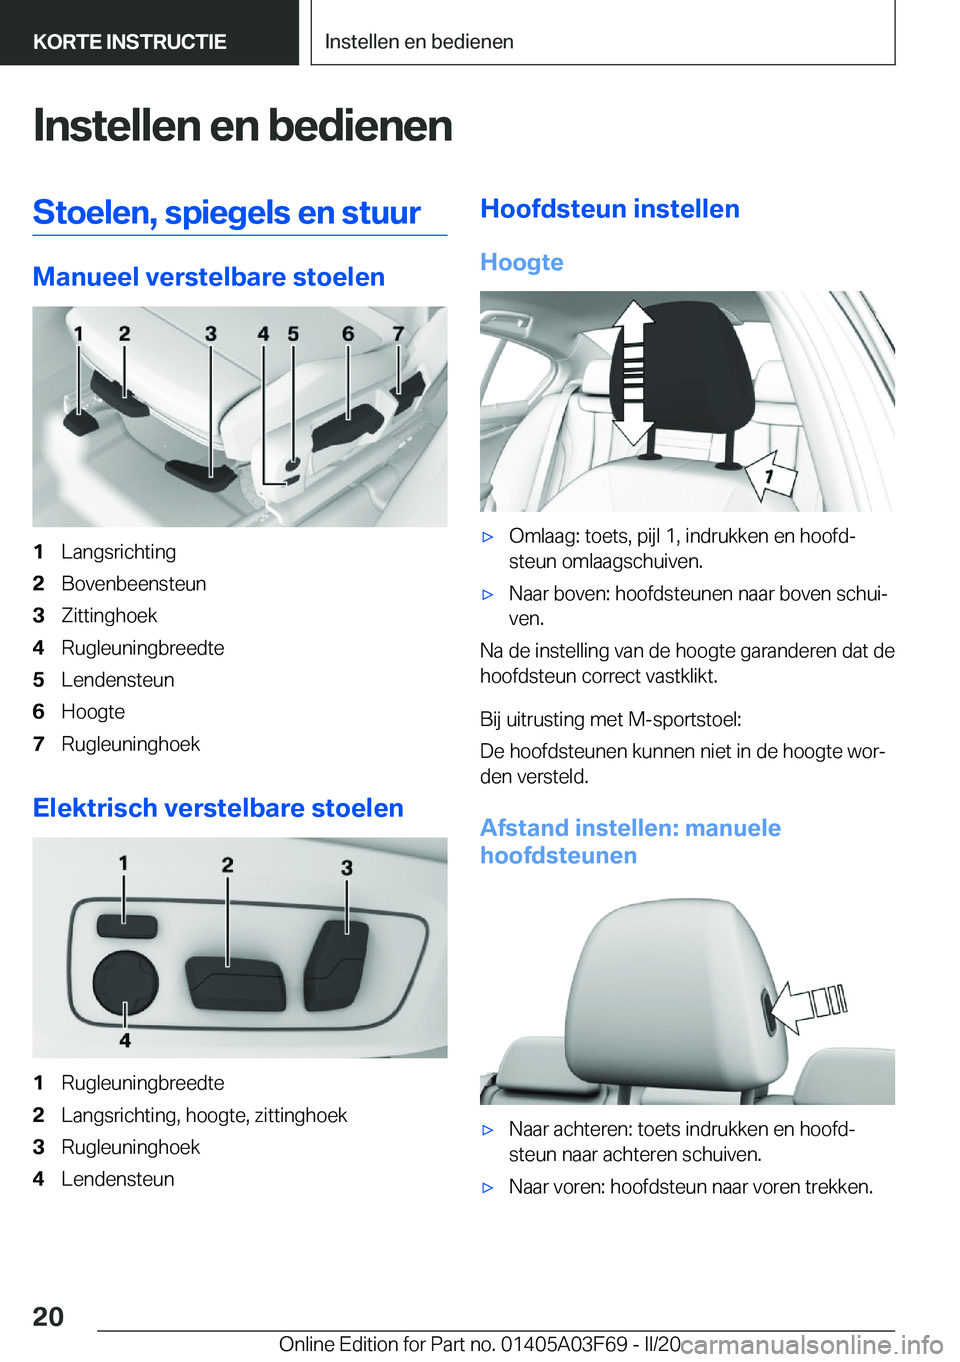 BMW 3 SERIES 2020  Instructieboekjes (in Dutch) �I�n�s�t�e�l�l�e�n��e�n��b�e�d�i�e�n�e�n�S�t�o�e�l�e�n�,��s�p�i�e�g�e�l�s��e�n��s�t�u�u�r
�M�a�n�u�e�e�l��v�e�r�s�t�e�l�b�a�r�e��s�t�o�e�l�e�n
�1�L�a�n�g�s�r�i�c�h�t�i�n�g�2�B�o�v�e�n�b�e�e�n�s